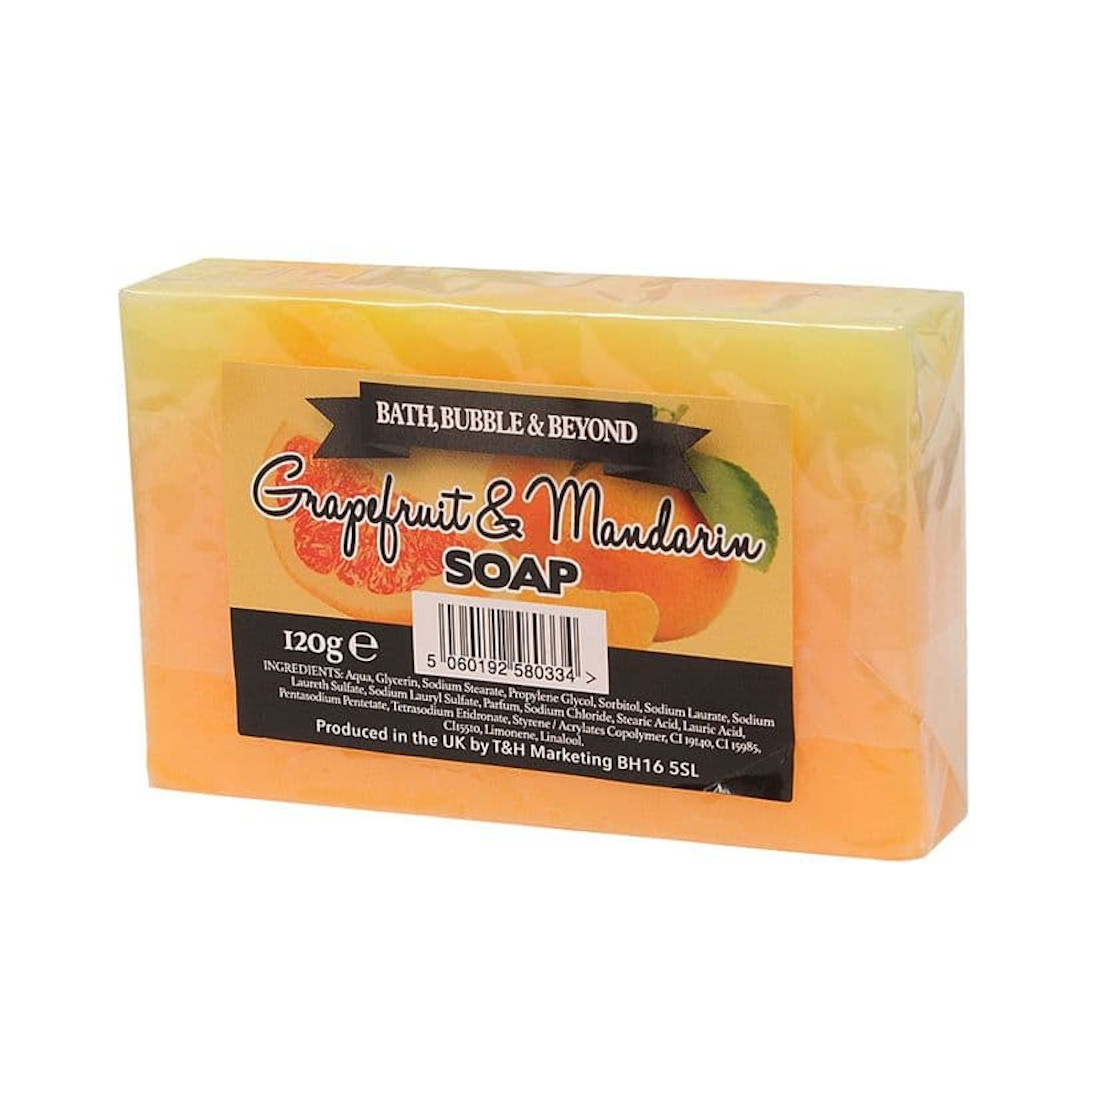 Bath Bubble and Beyond Grapefruit & Mandarin Glycerin Soap 120g